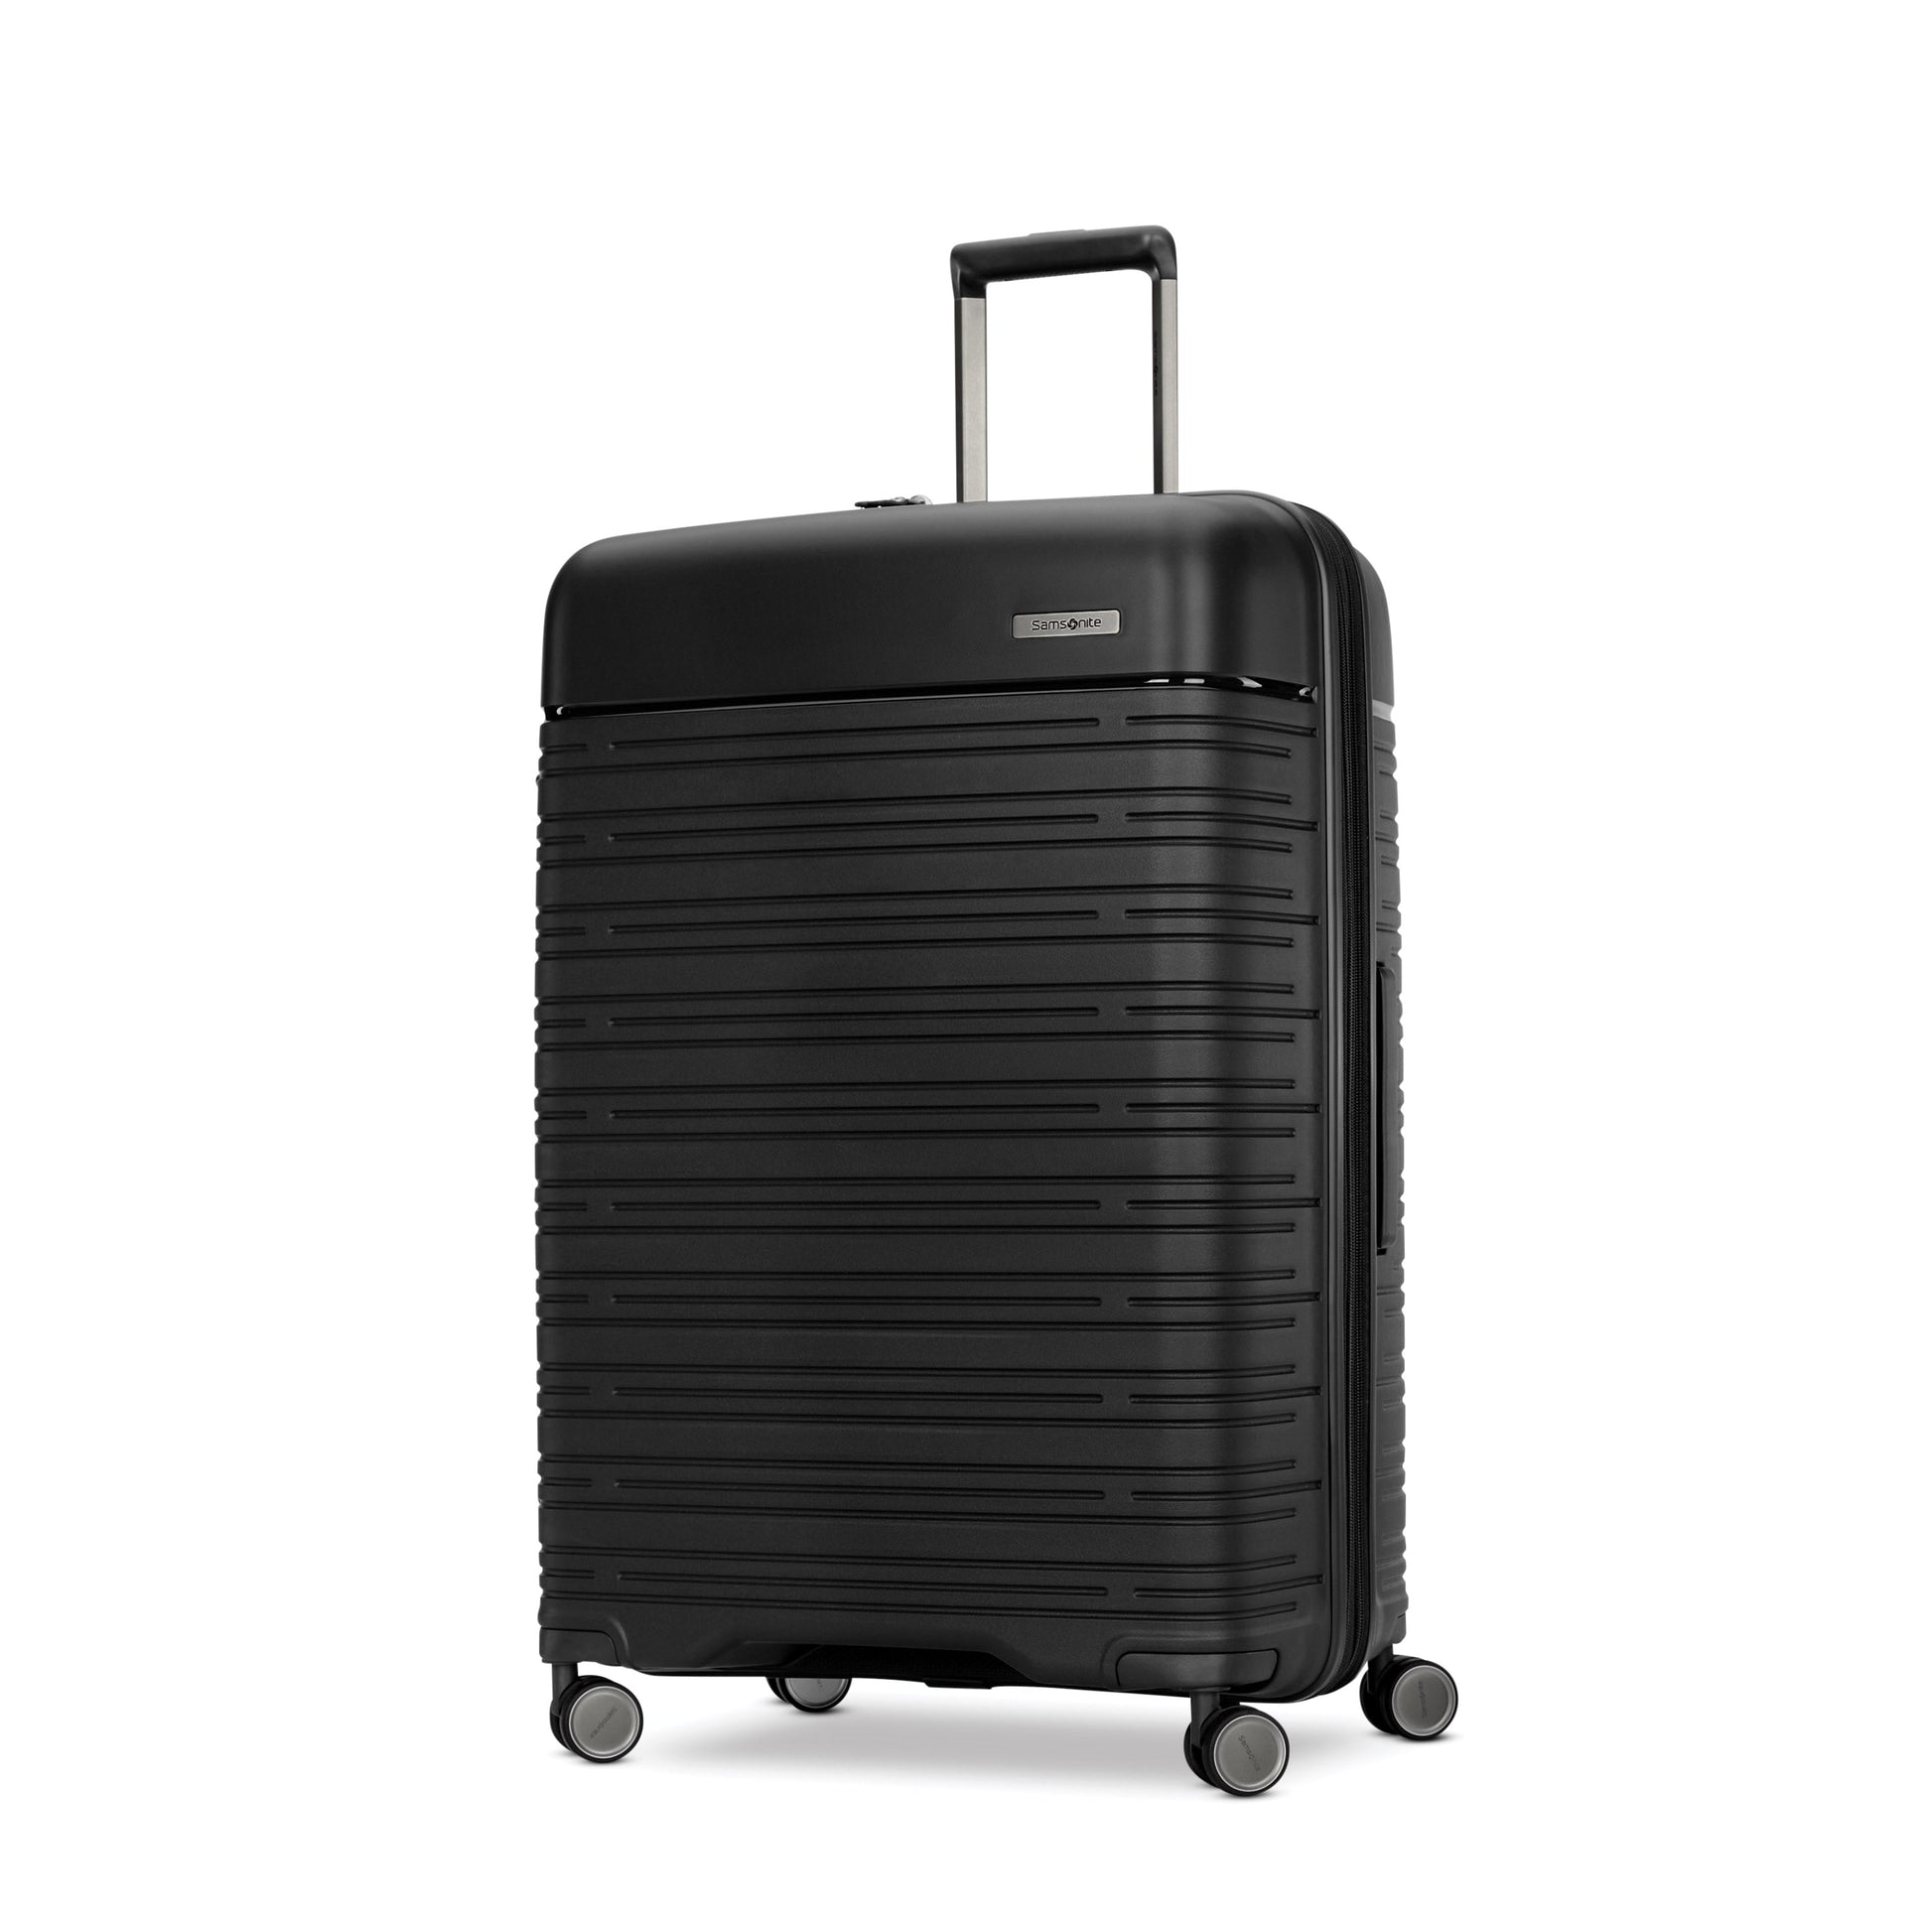 Samsonite Elevation Plus Large Expandable Spinner Luggage - Triple Black